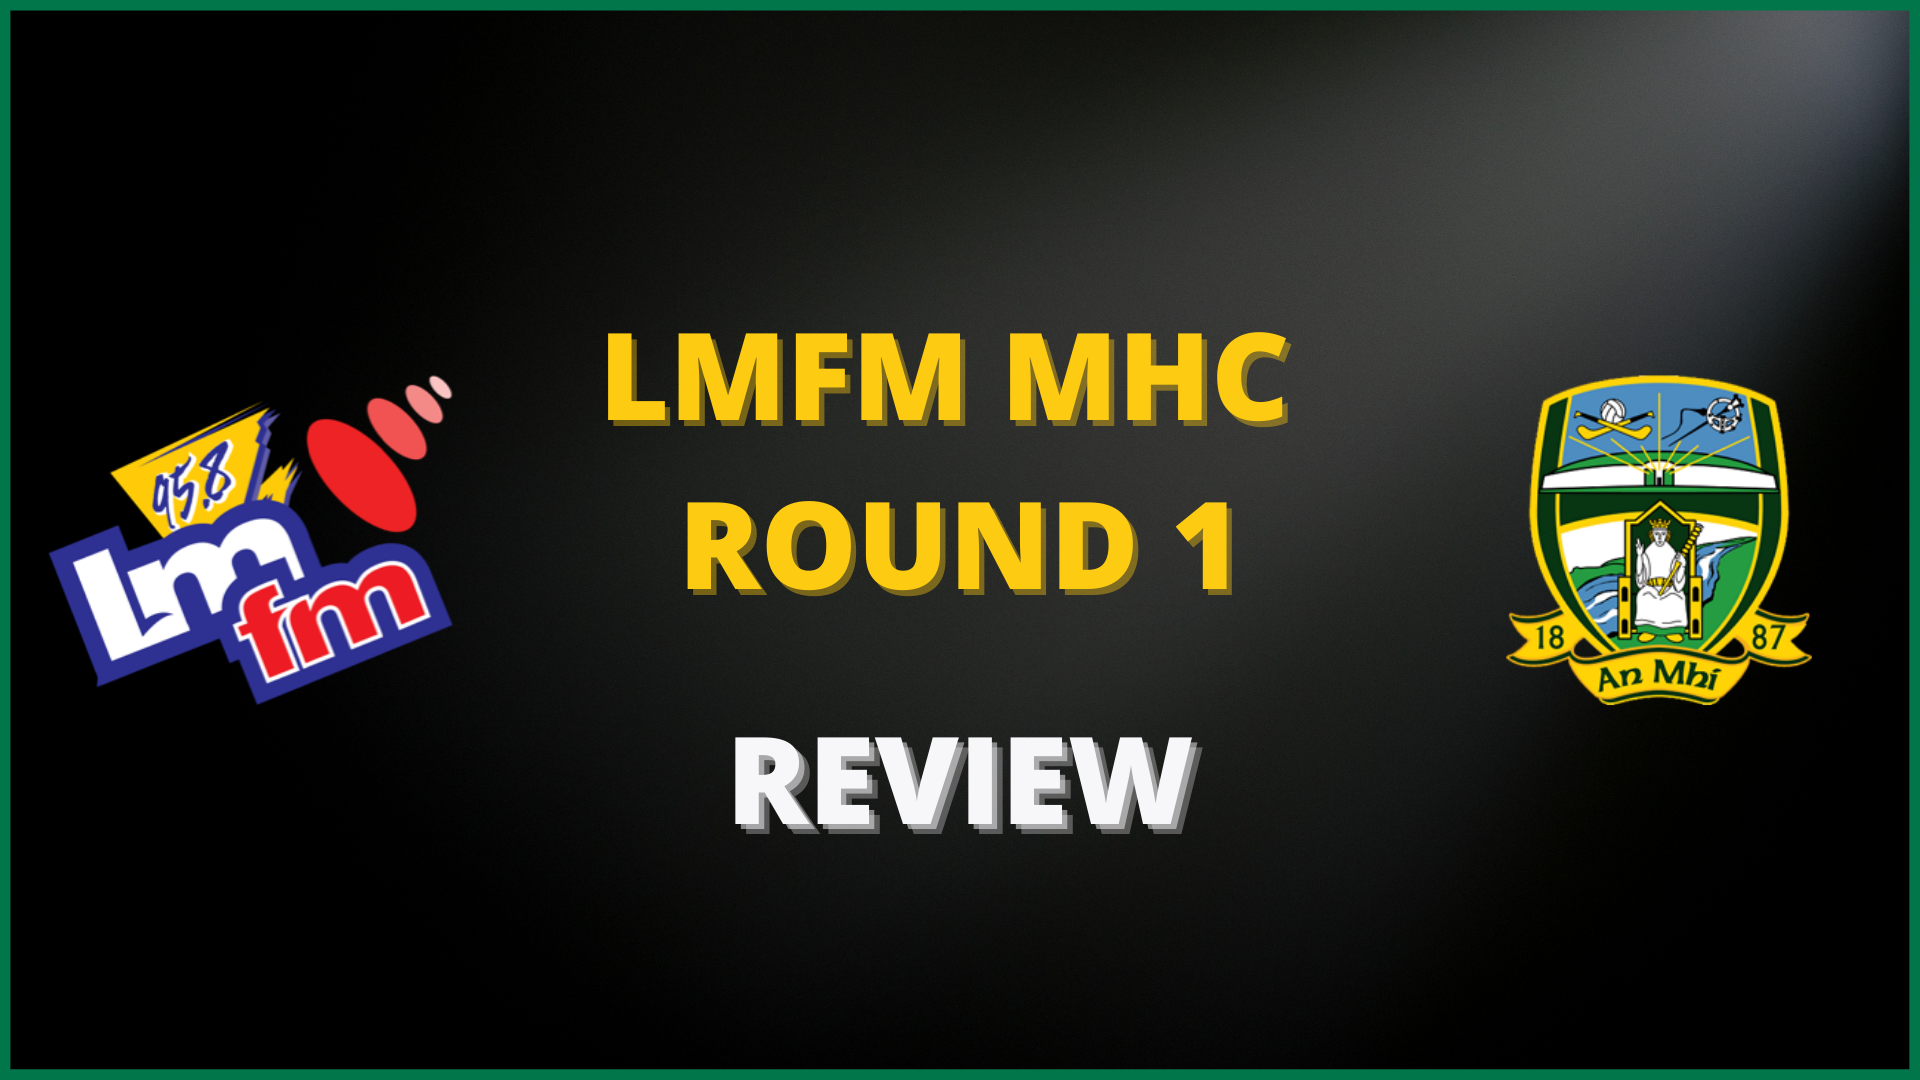 LMFM MHC Round 1 Review